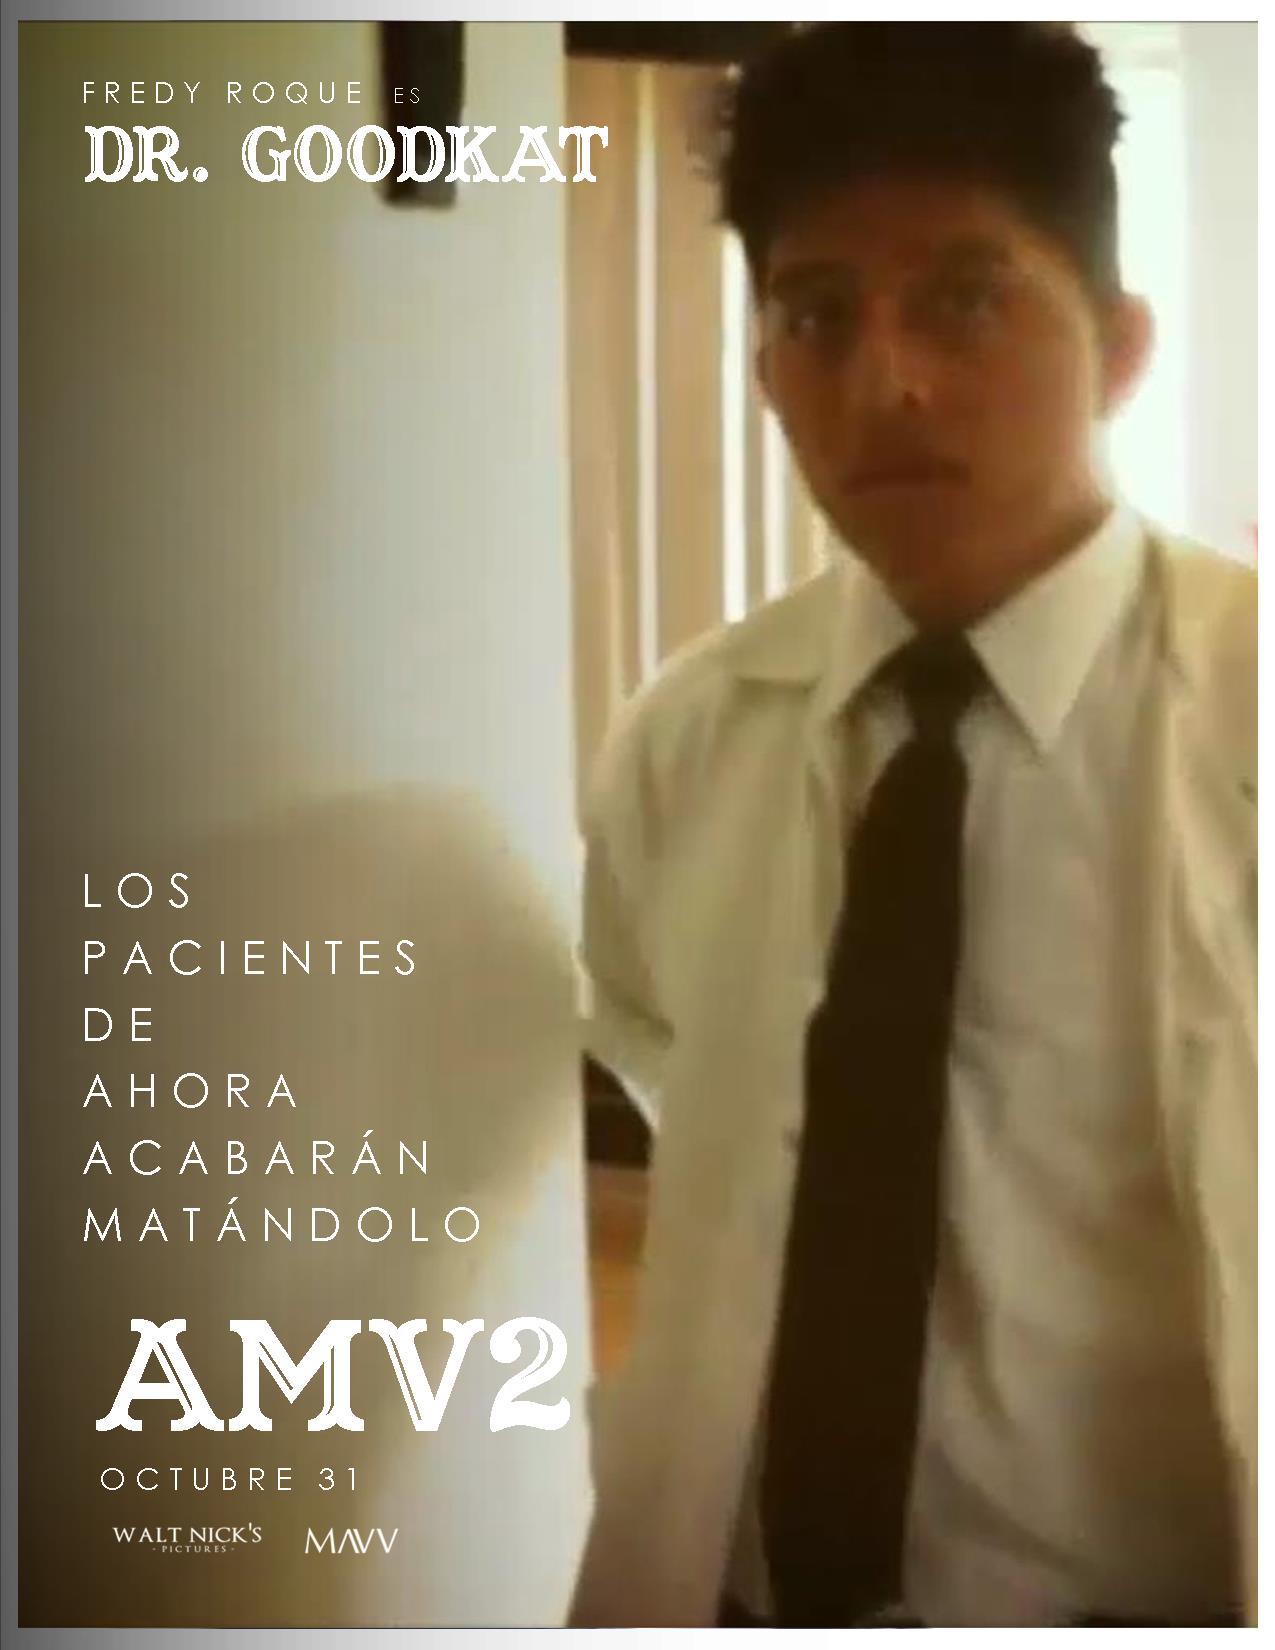 Póster #AMV2 - Dr. Goodkat (Octubre 22)